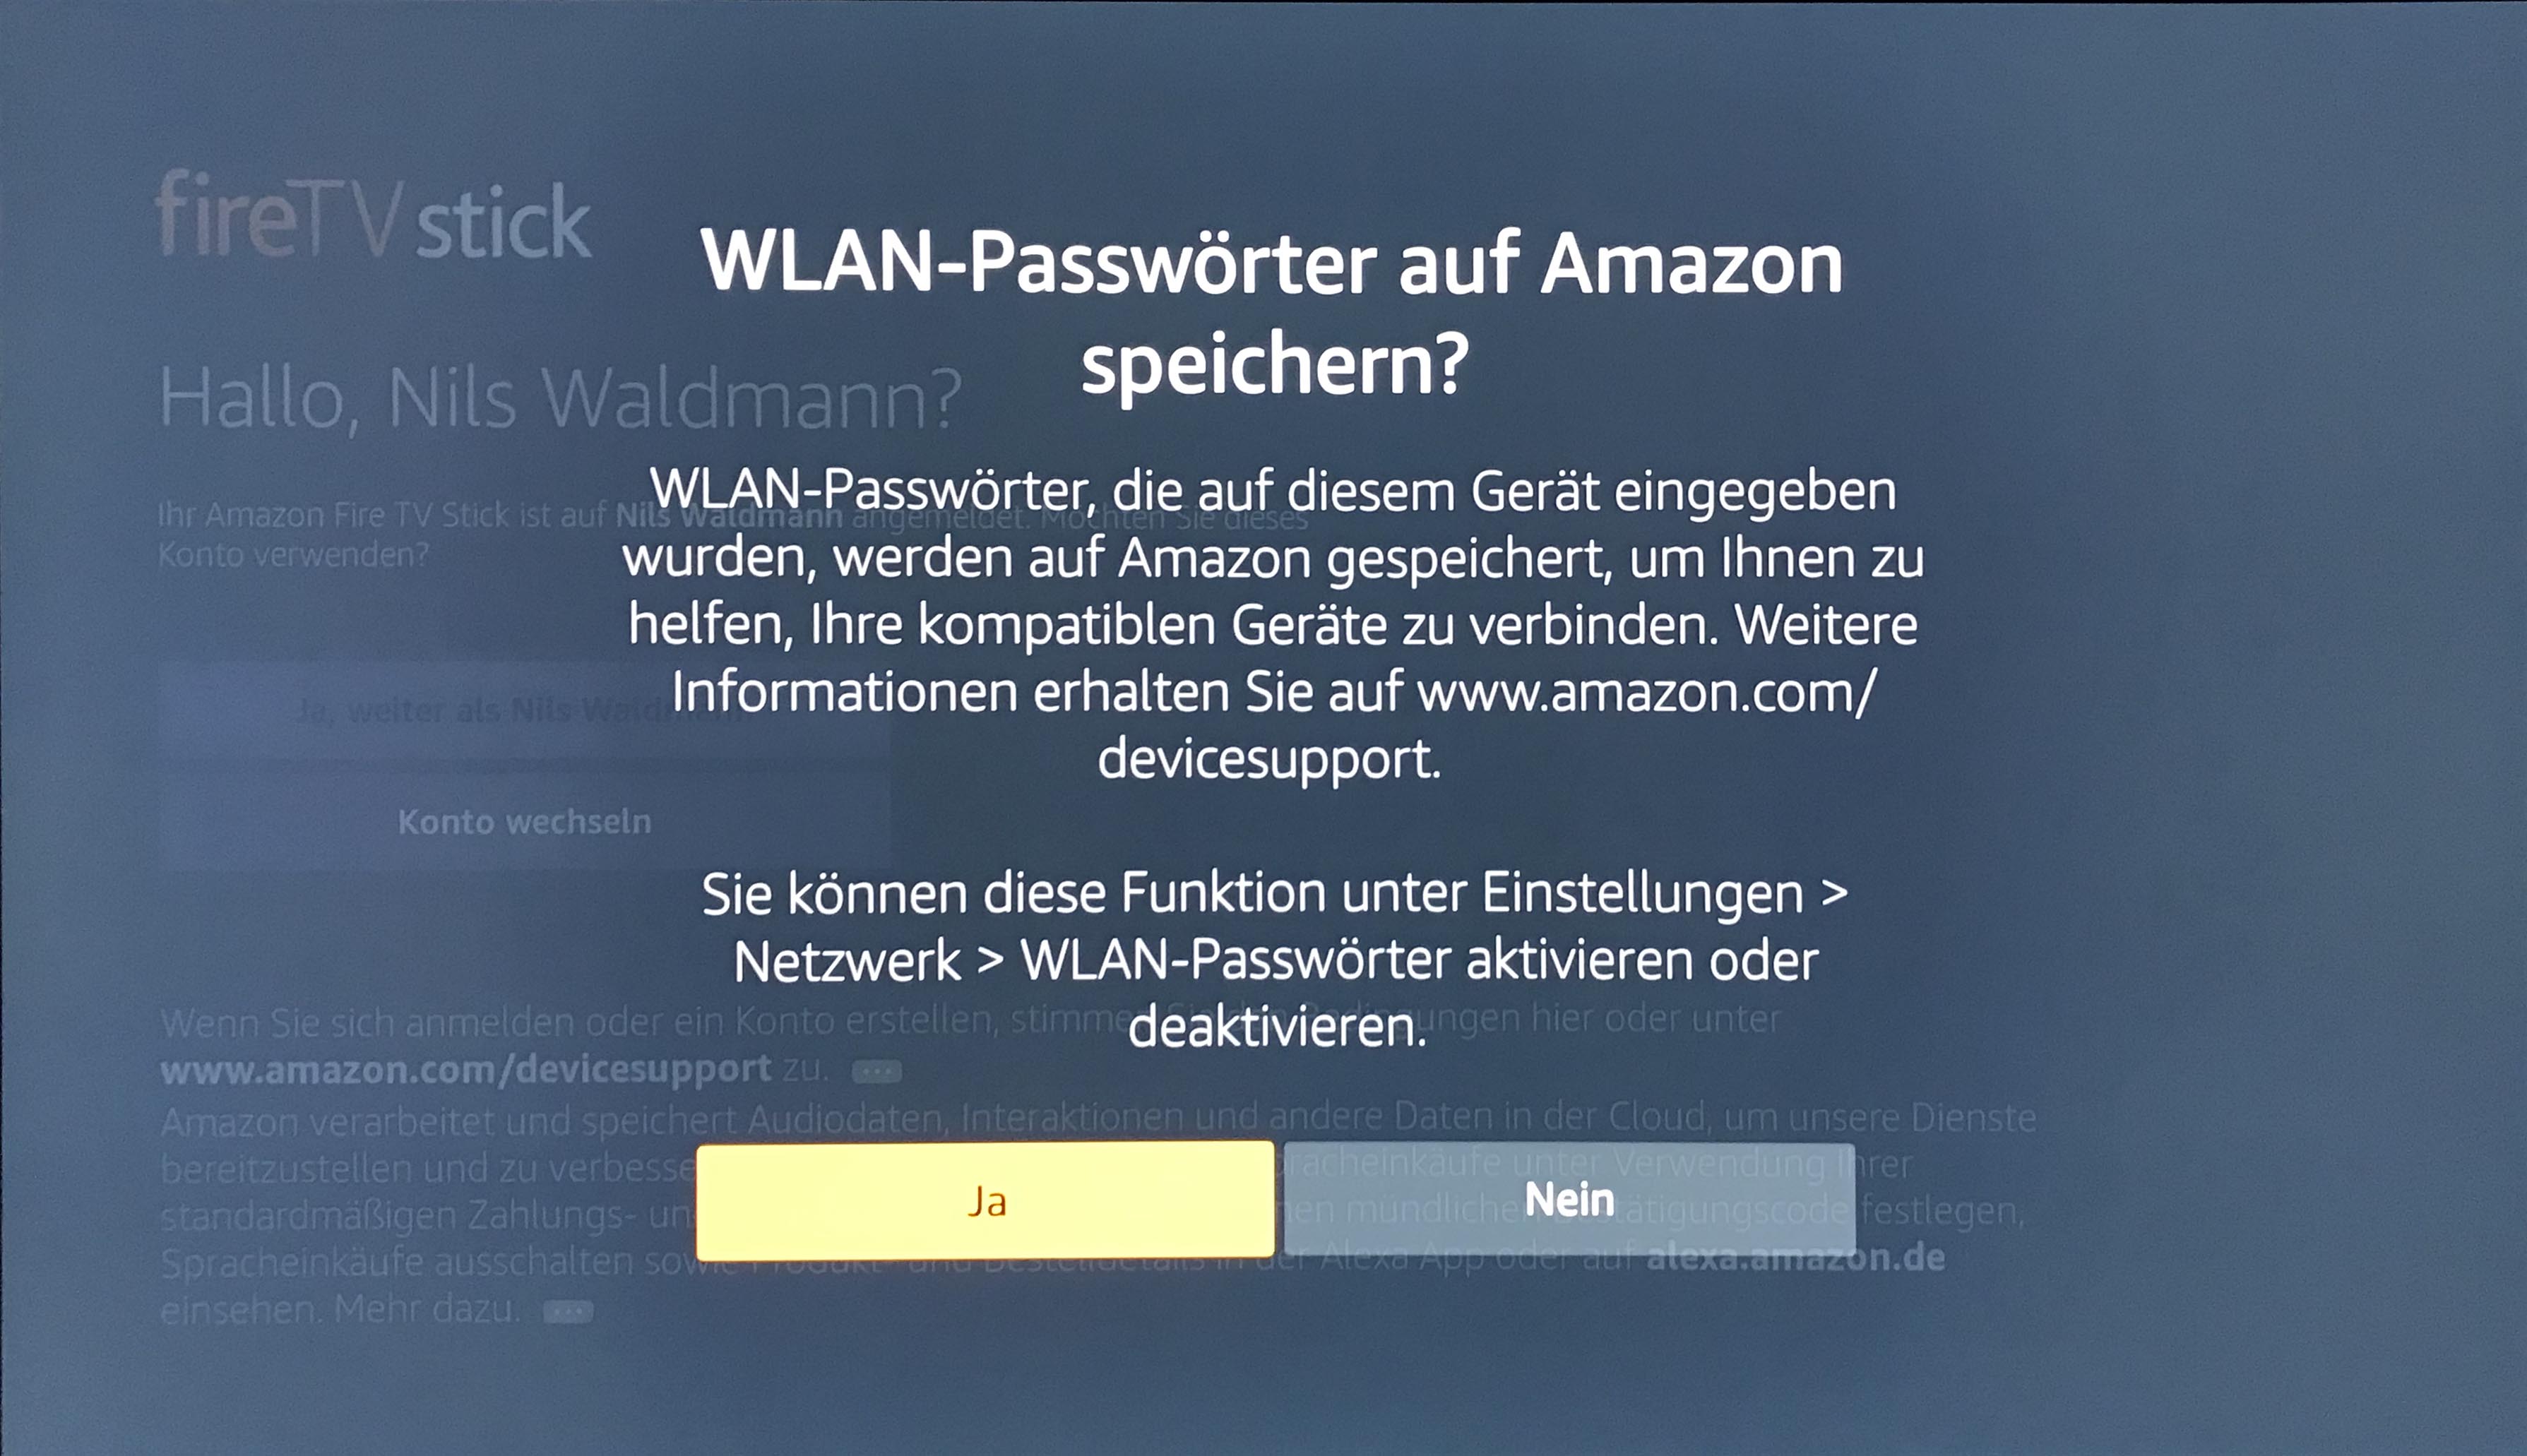 Amazon FireTV Stick - WLAN Passwort in der Cloud